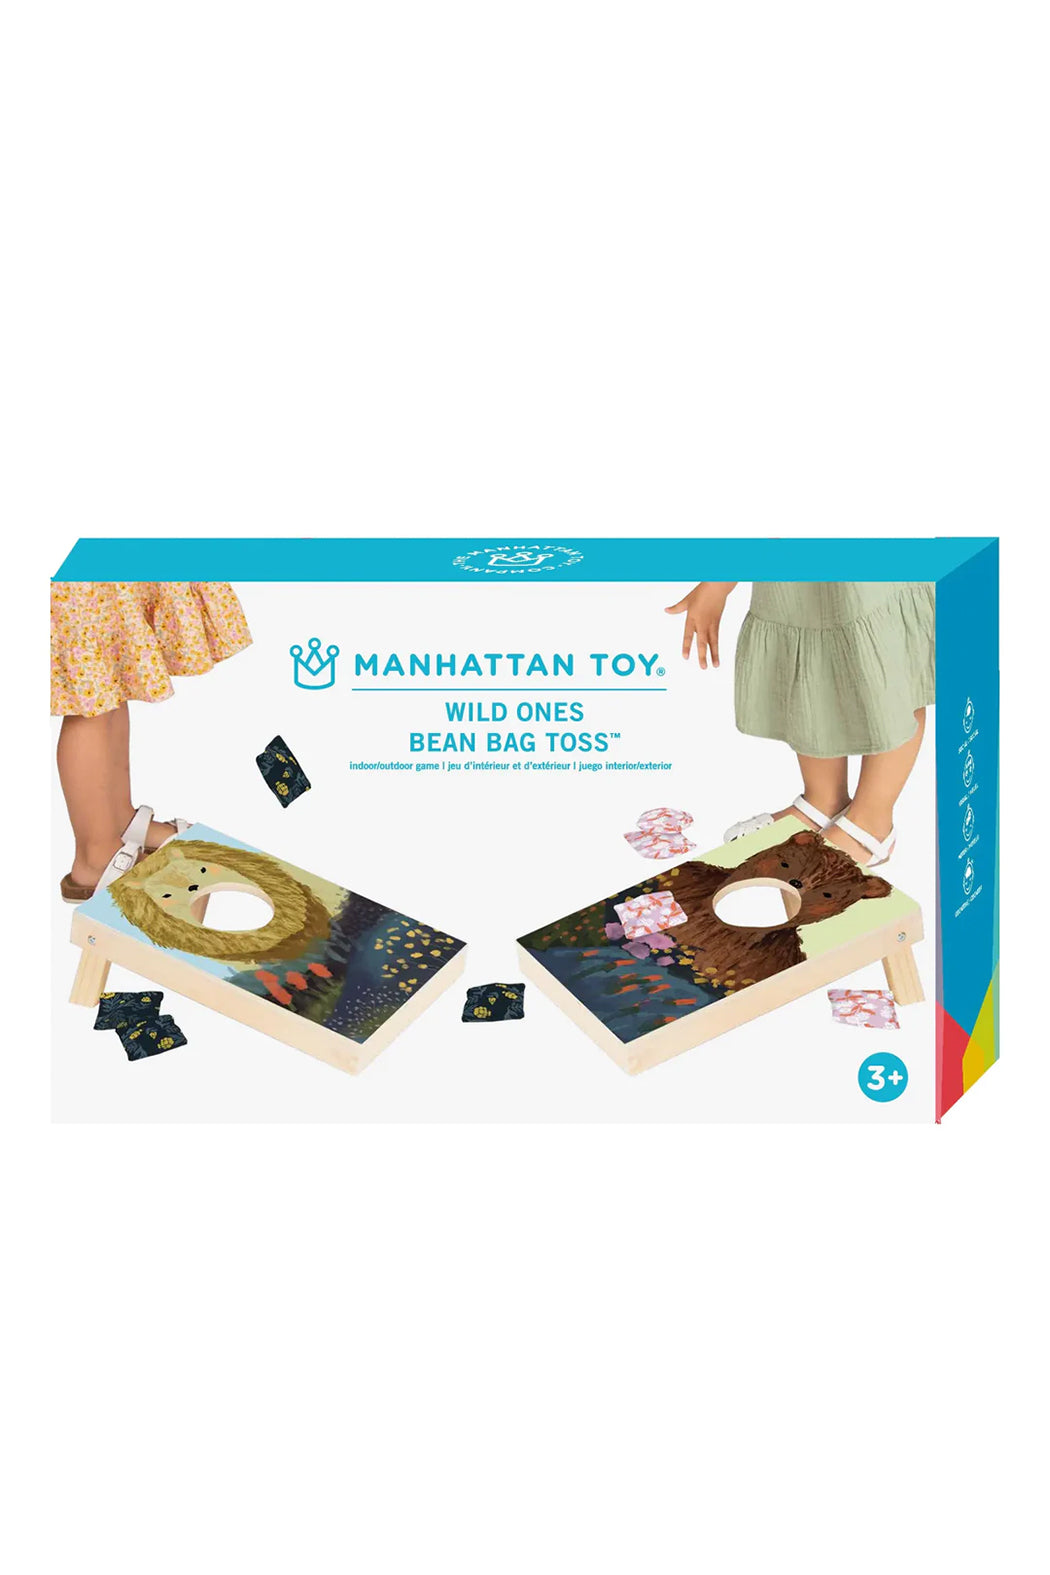 Manhattan Toy Company Wild Ones Bean Toss